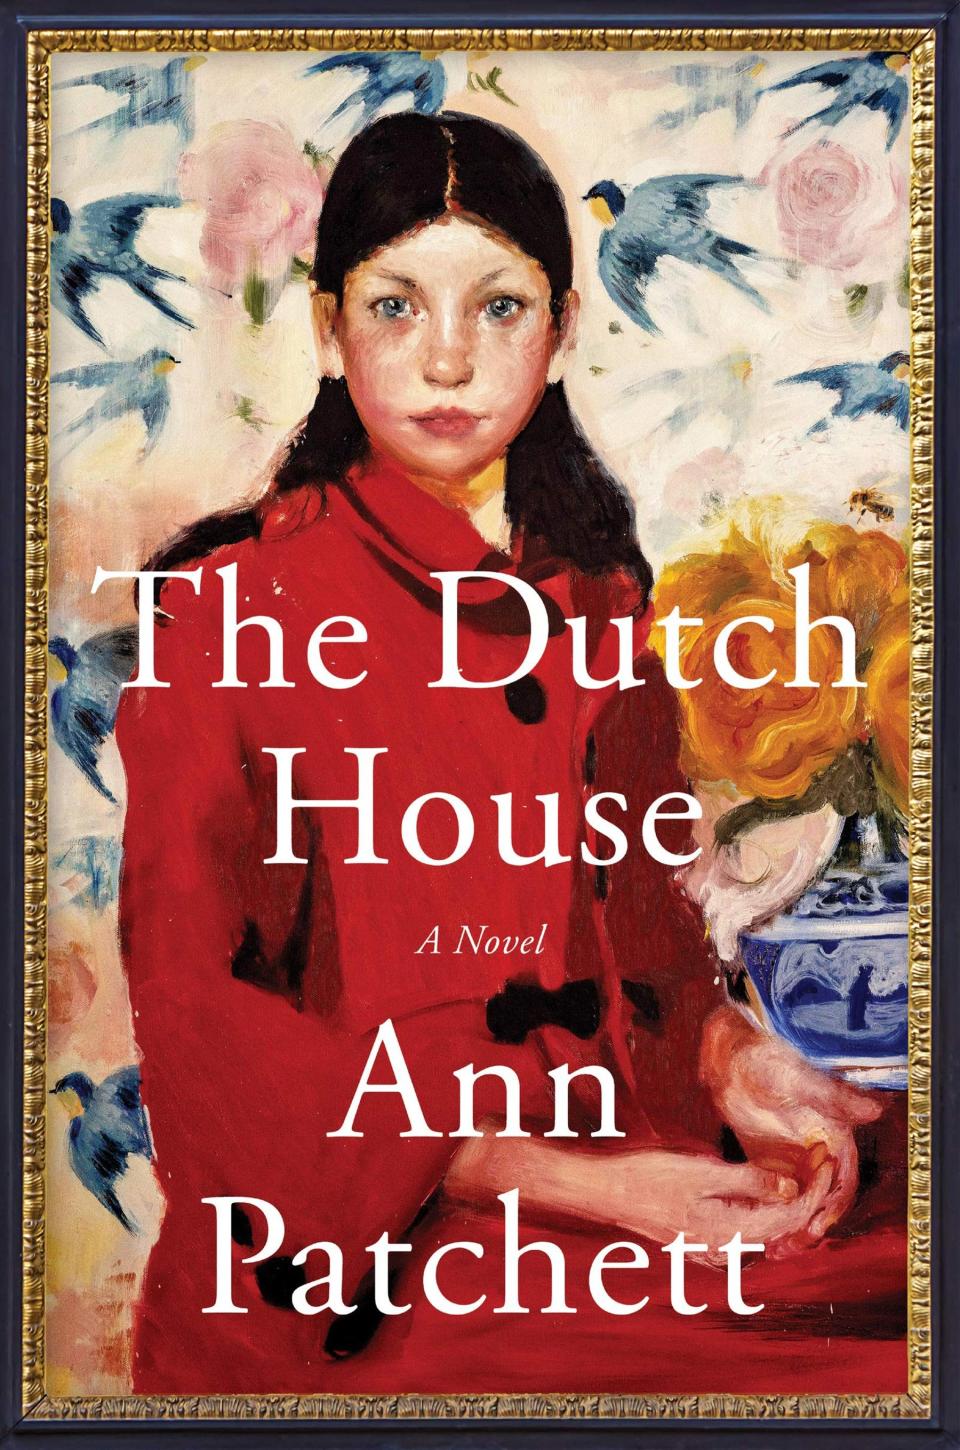 Ann Patchett spins a dark, compelling fairy tale in The Dutch House